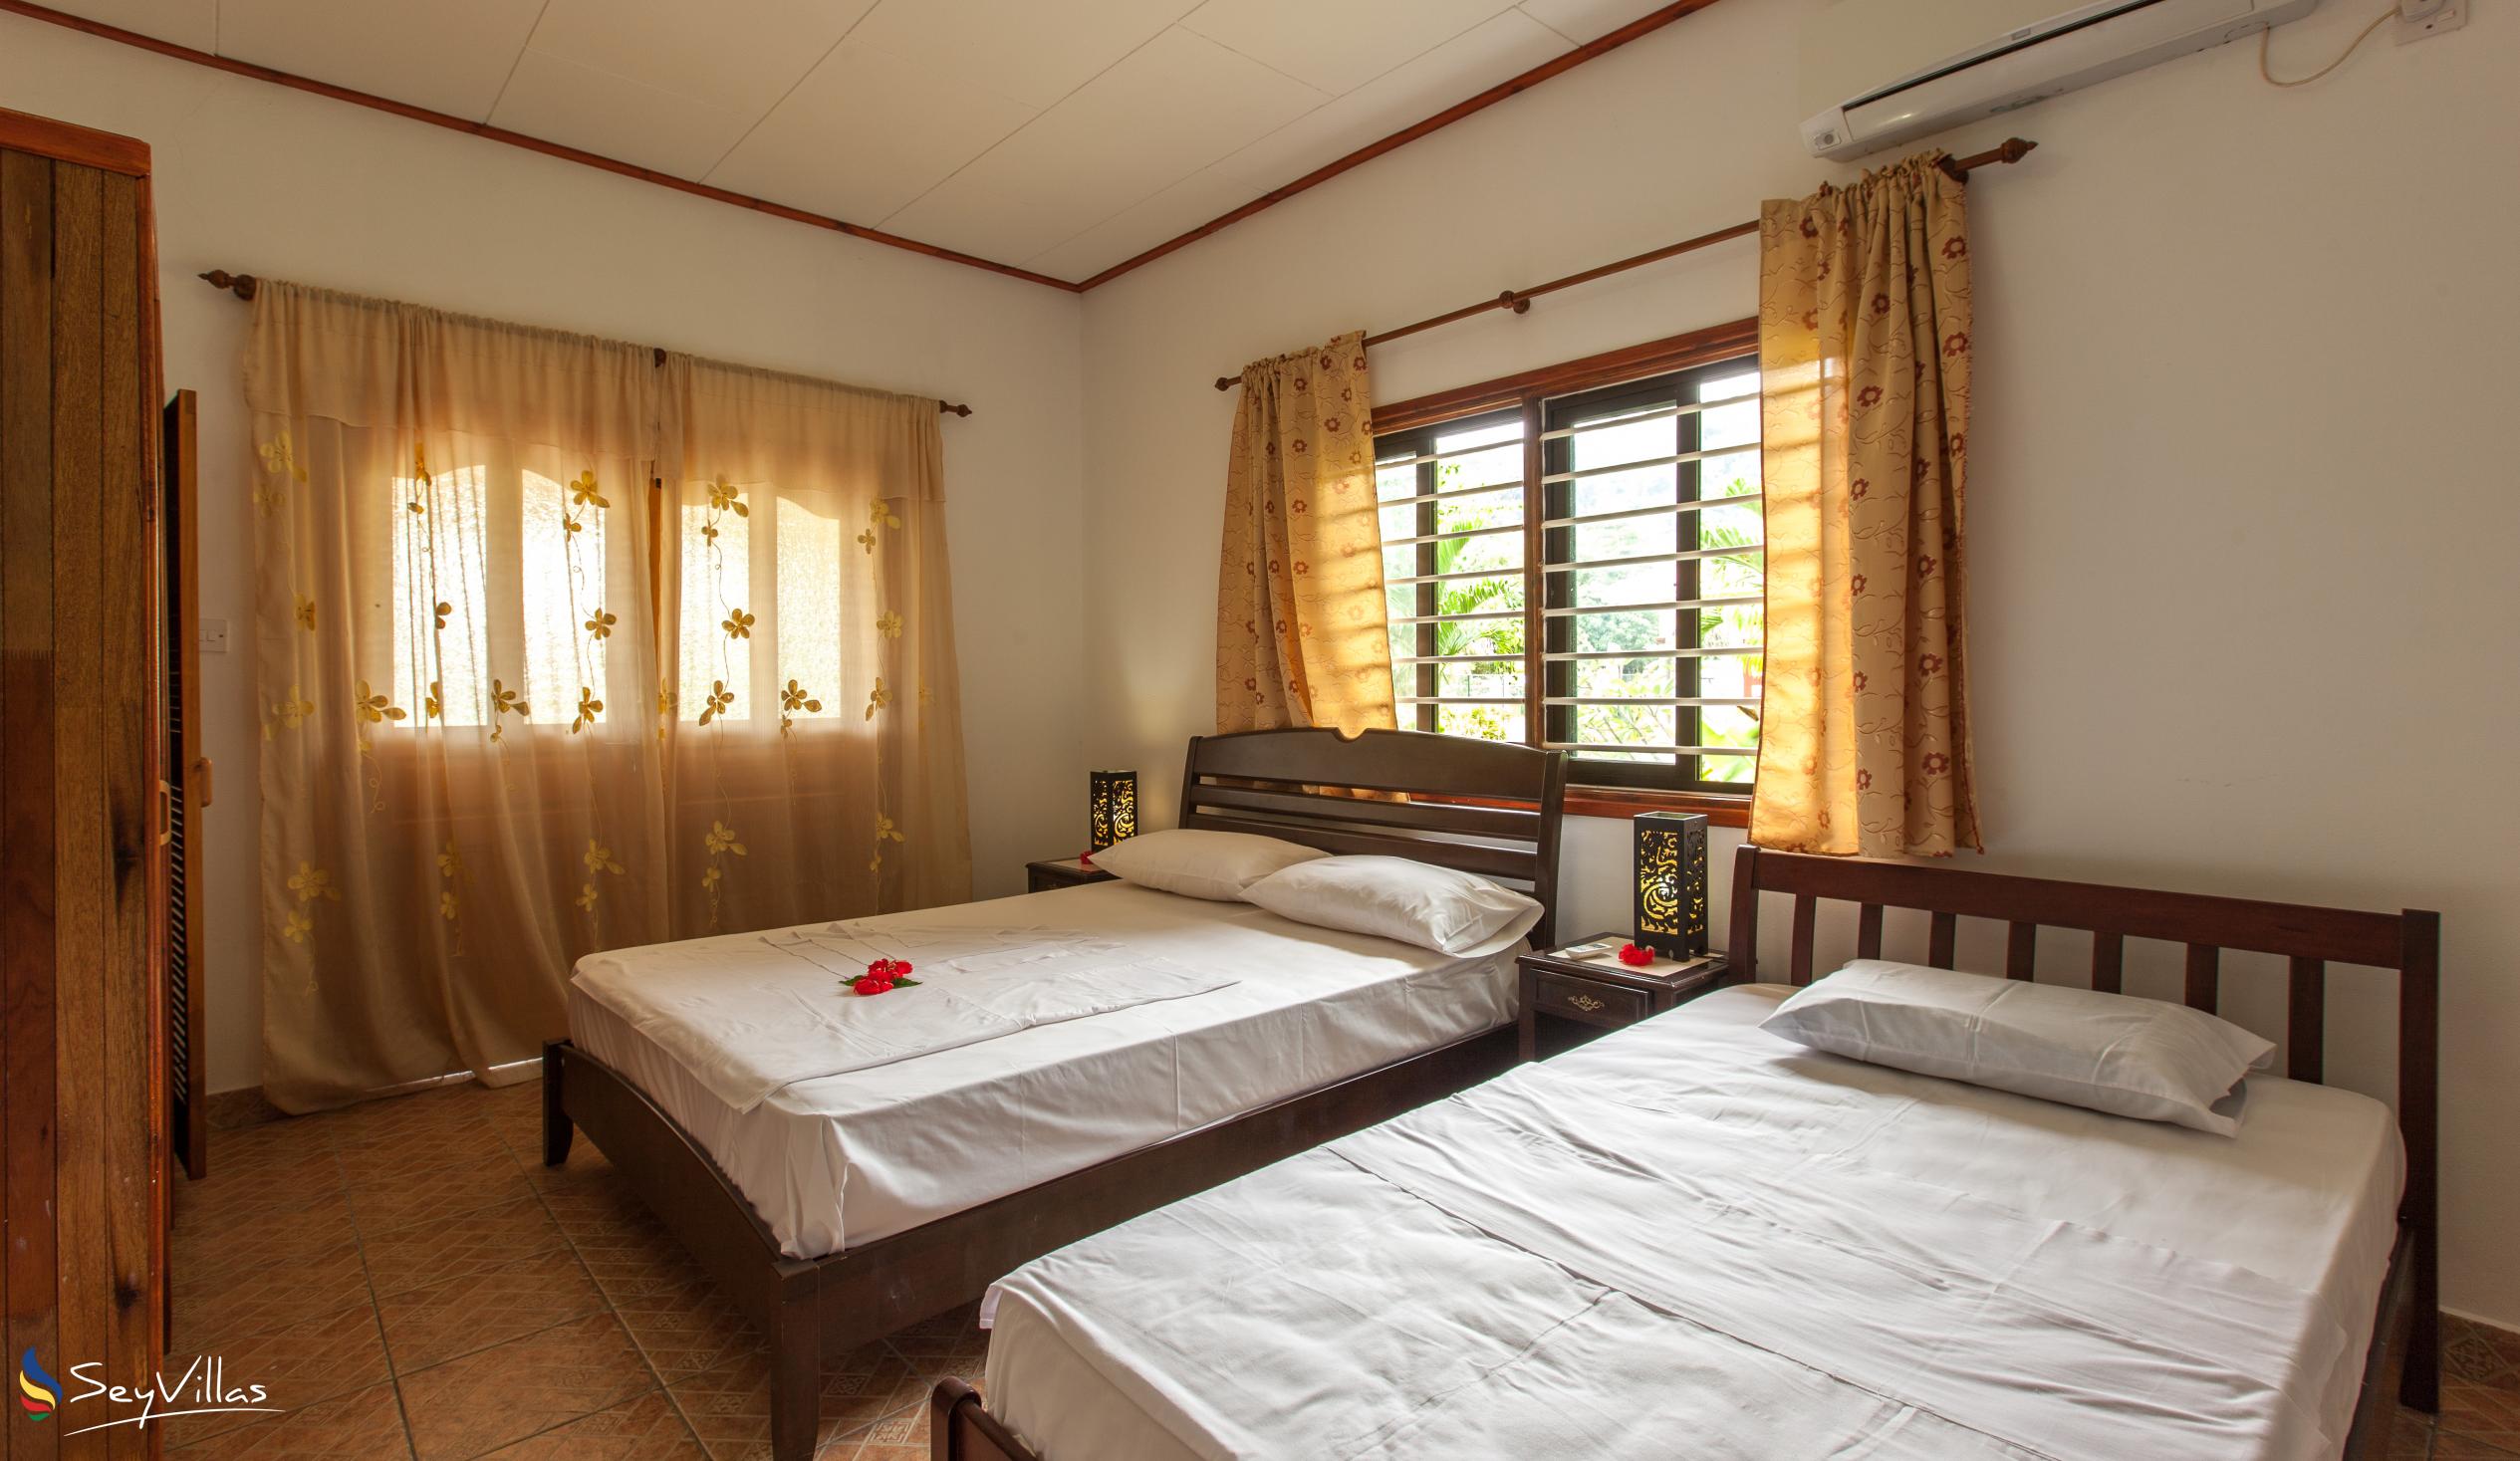 Foto 47: Zerof Self Catering  Apartments - Appartement à 3 chambres - La Digue (Seychelles)